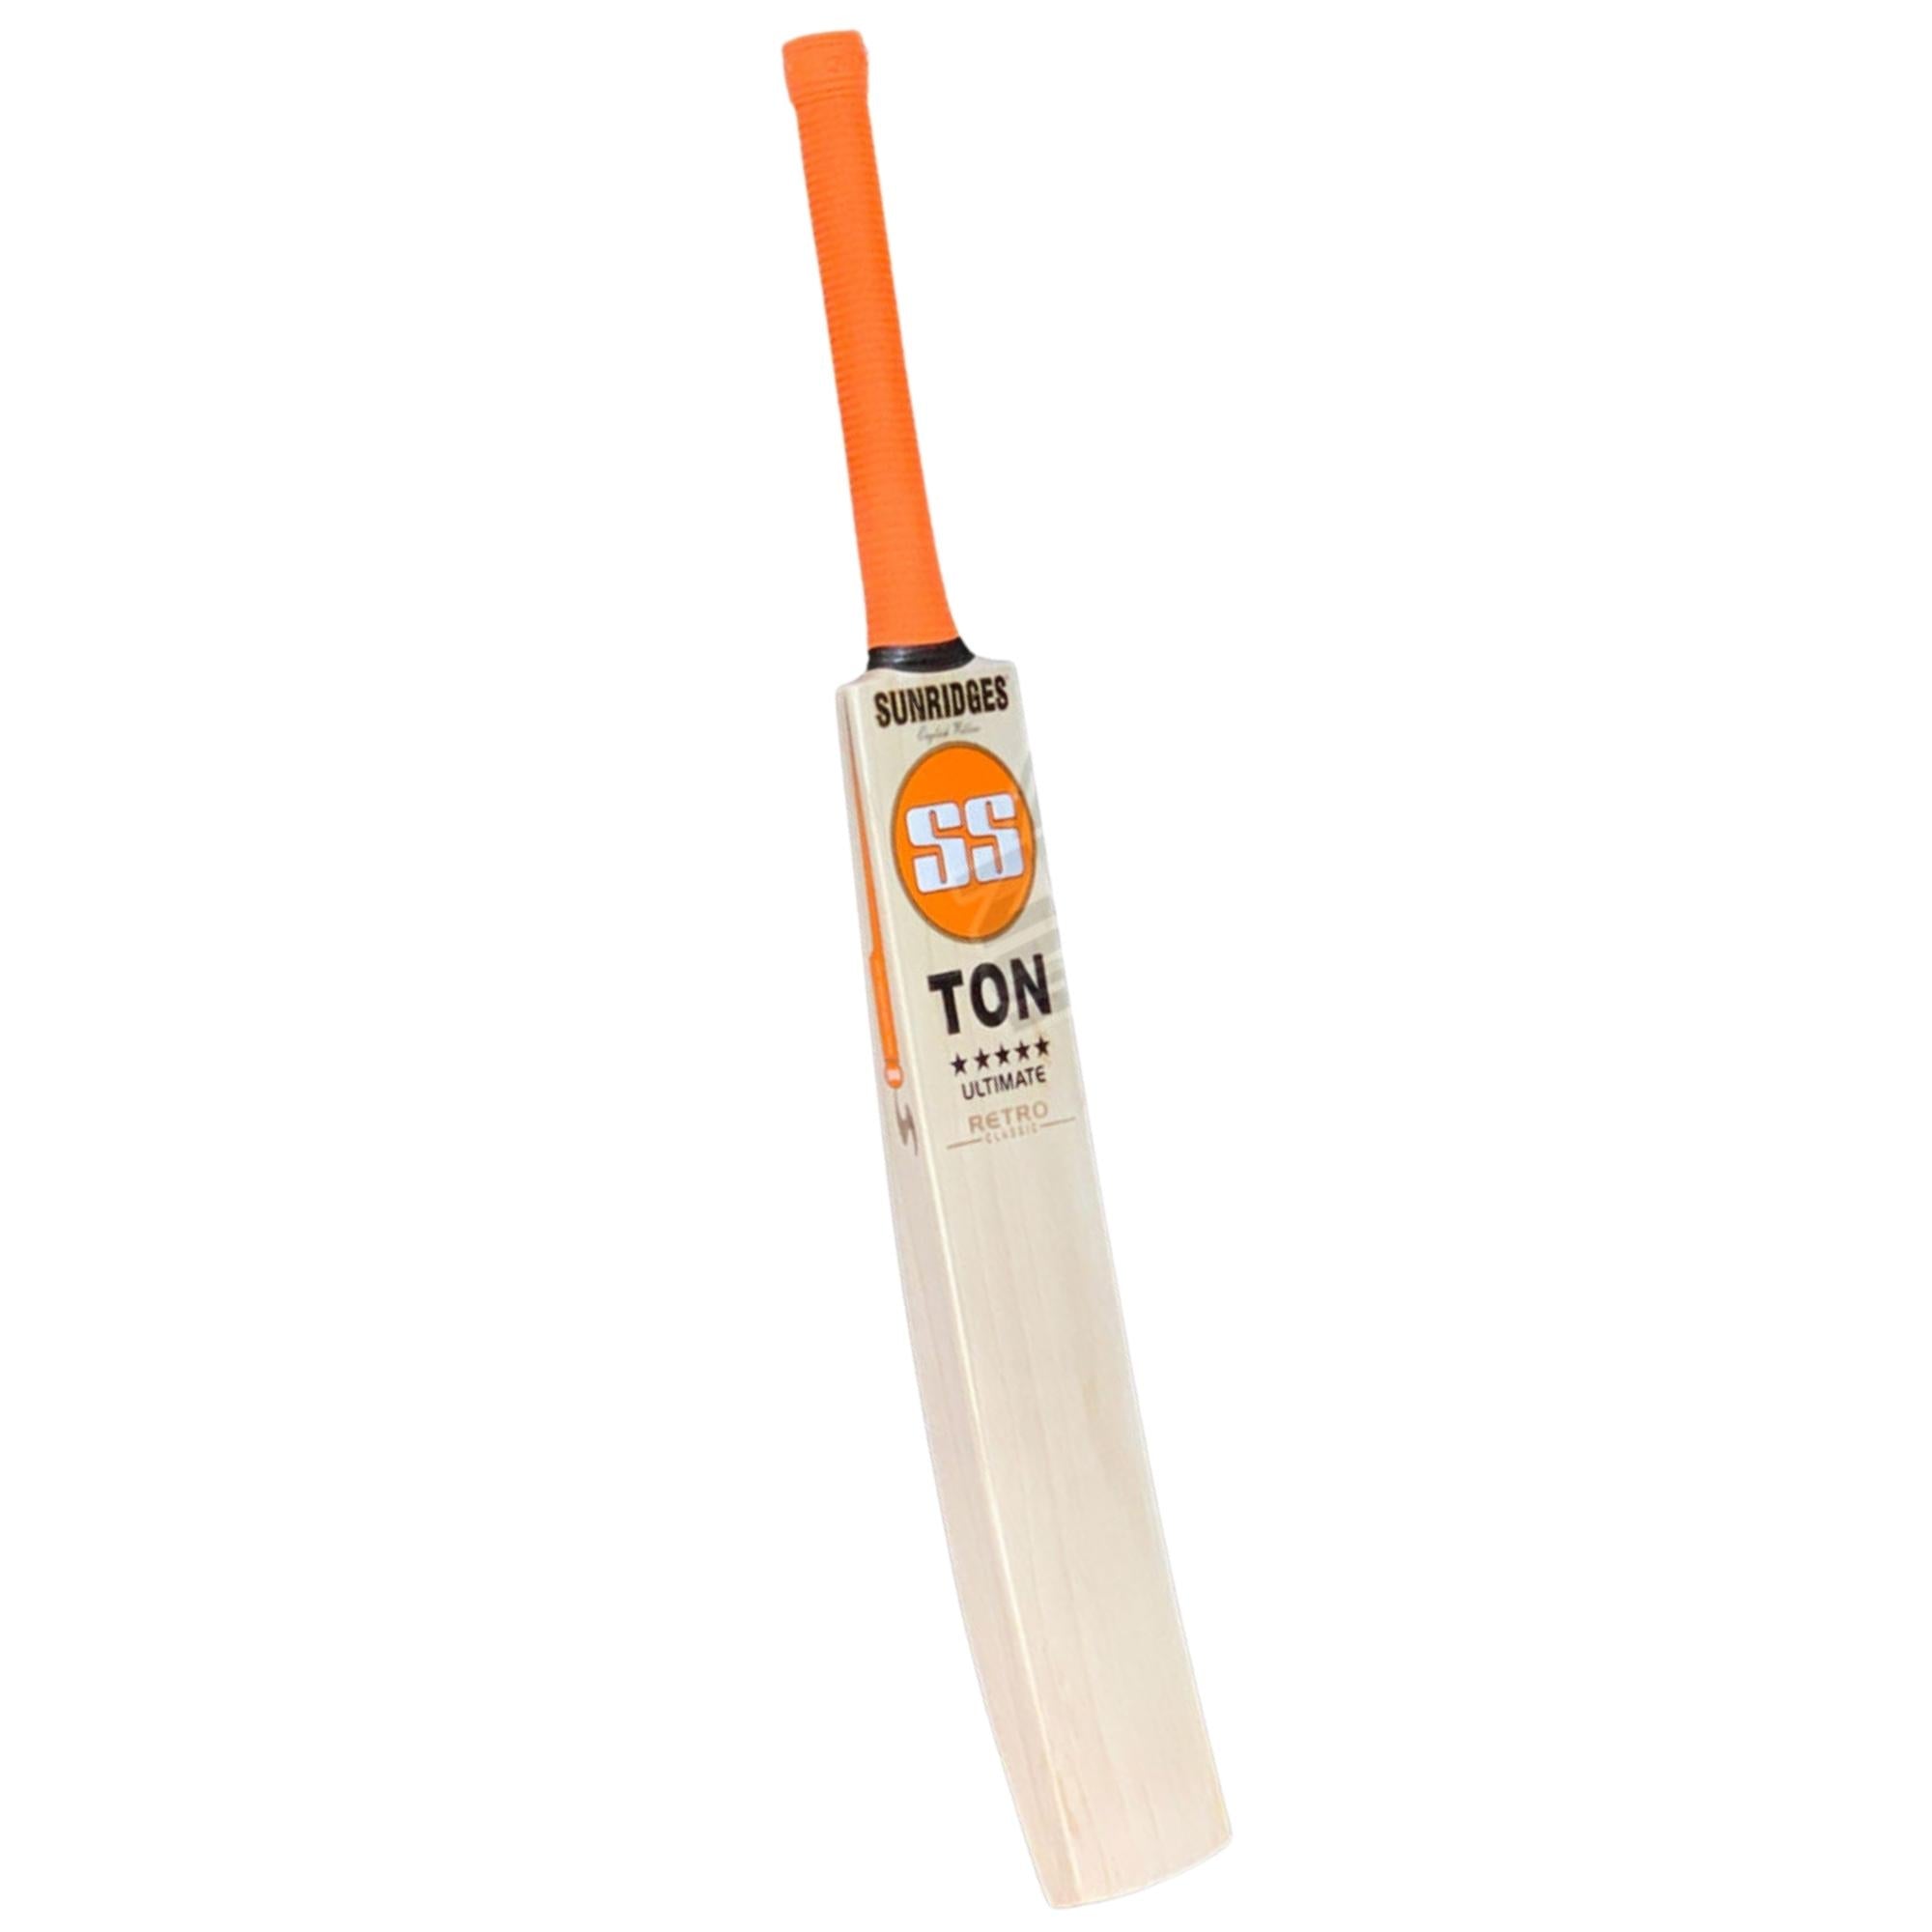 SS Ton Sunridges Ultimate Retro Classic Cricket Bat